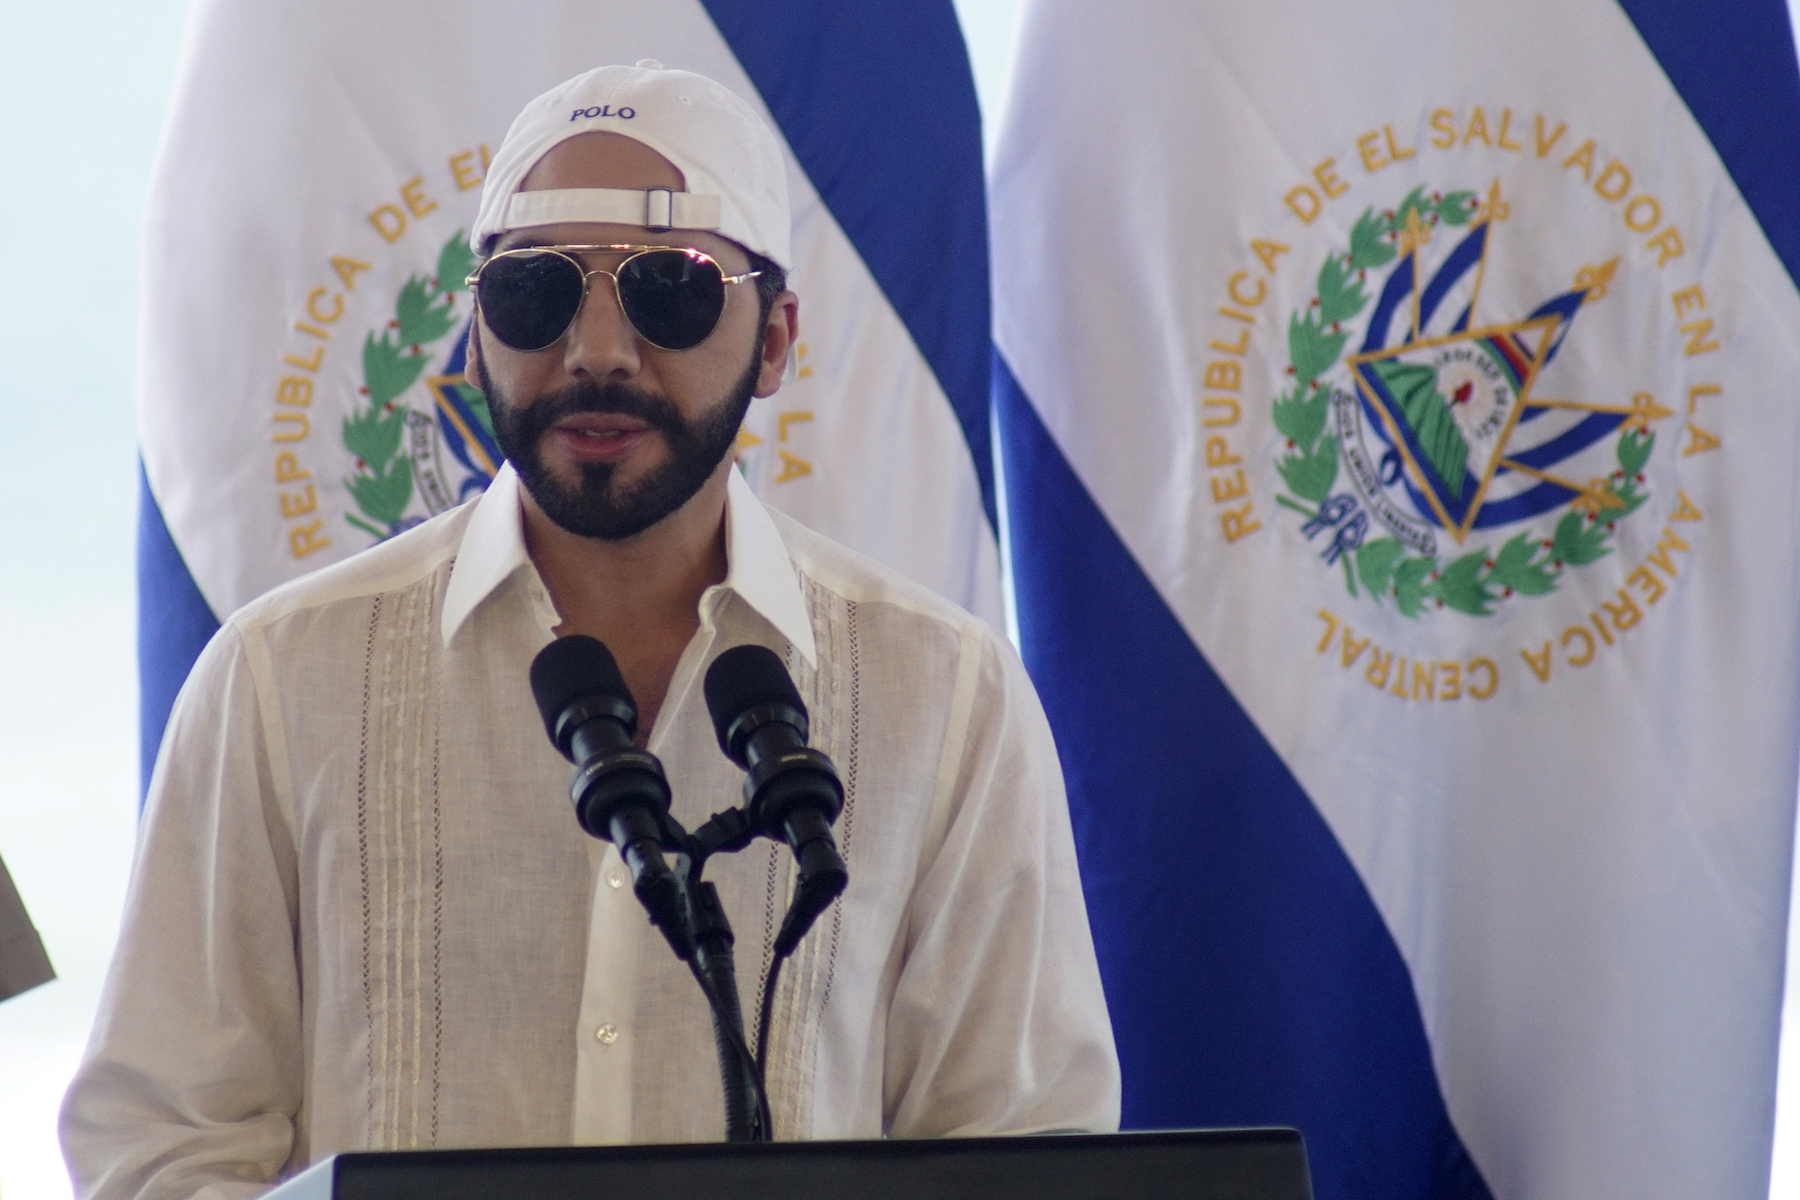 El Salvador president re-elect 